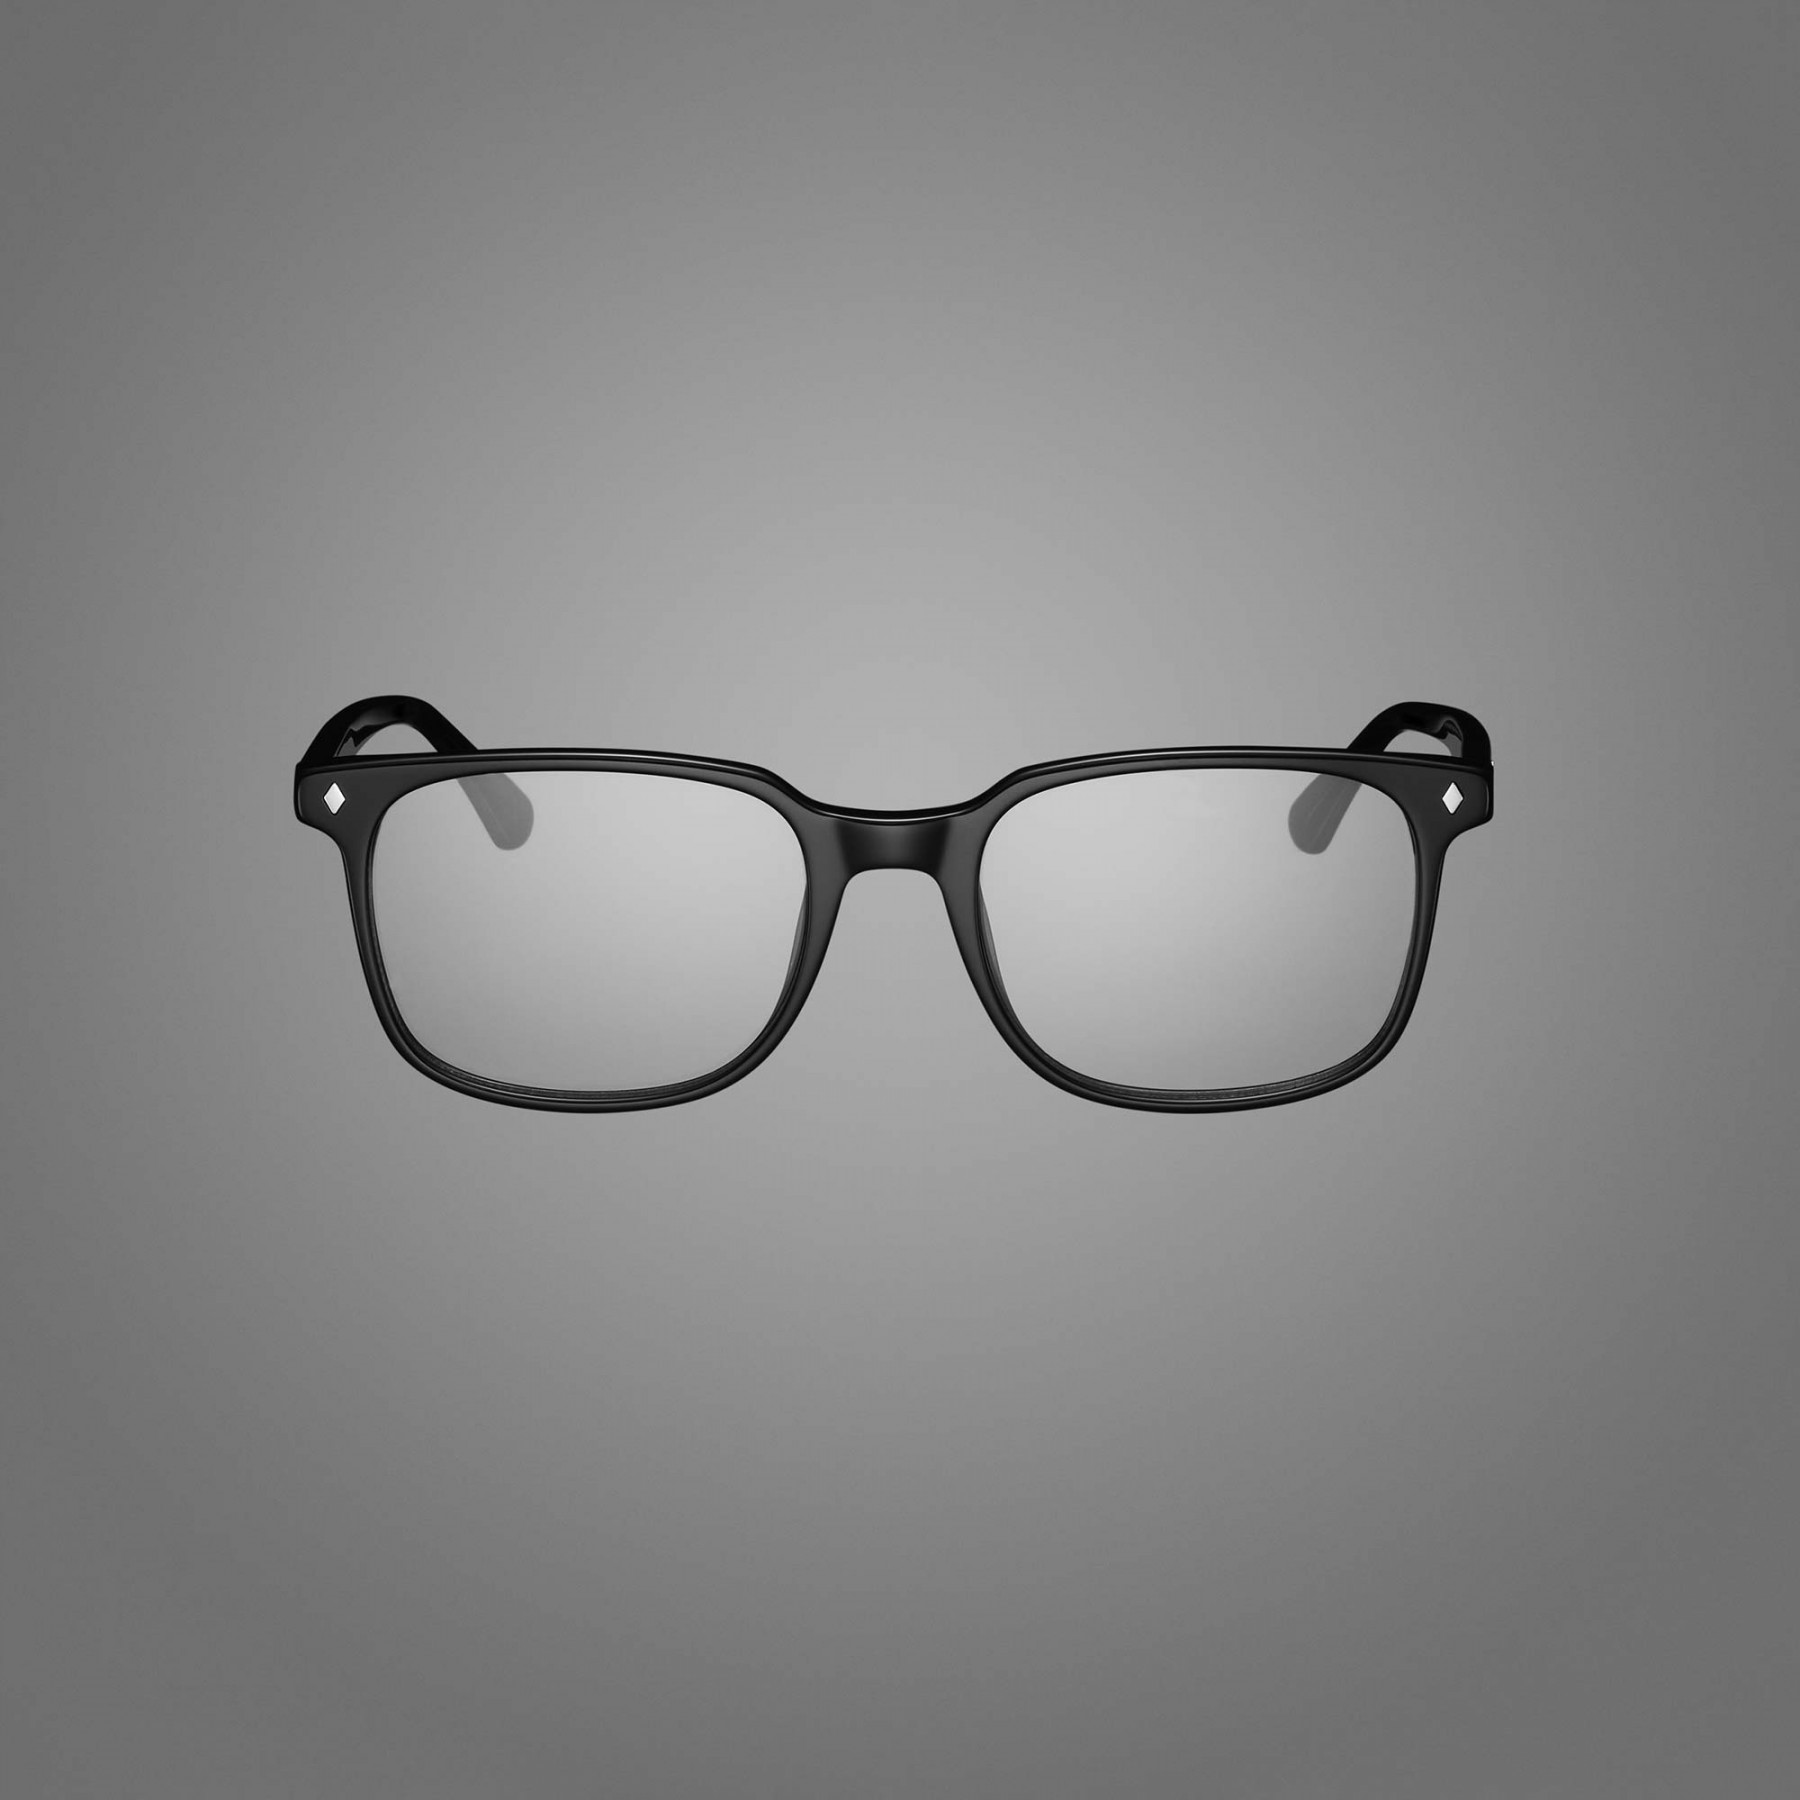 Web 5408 001 - Oculos de Grau